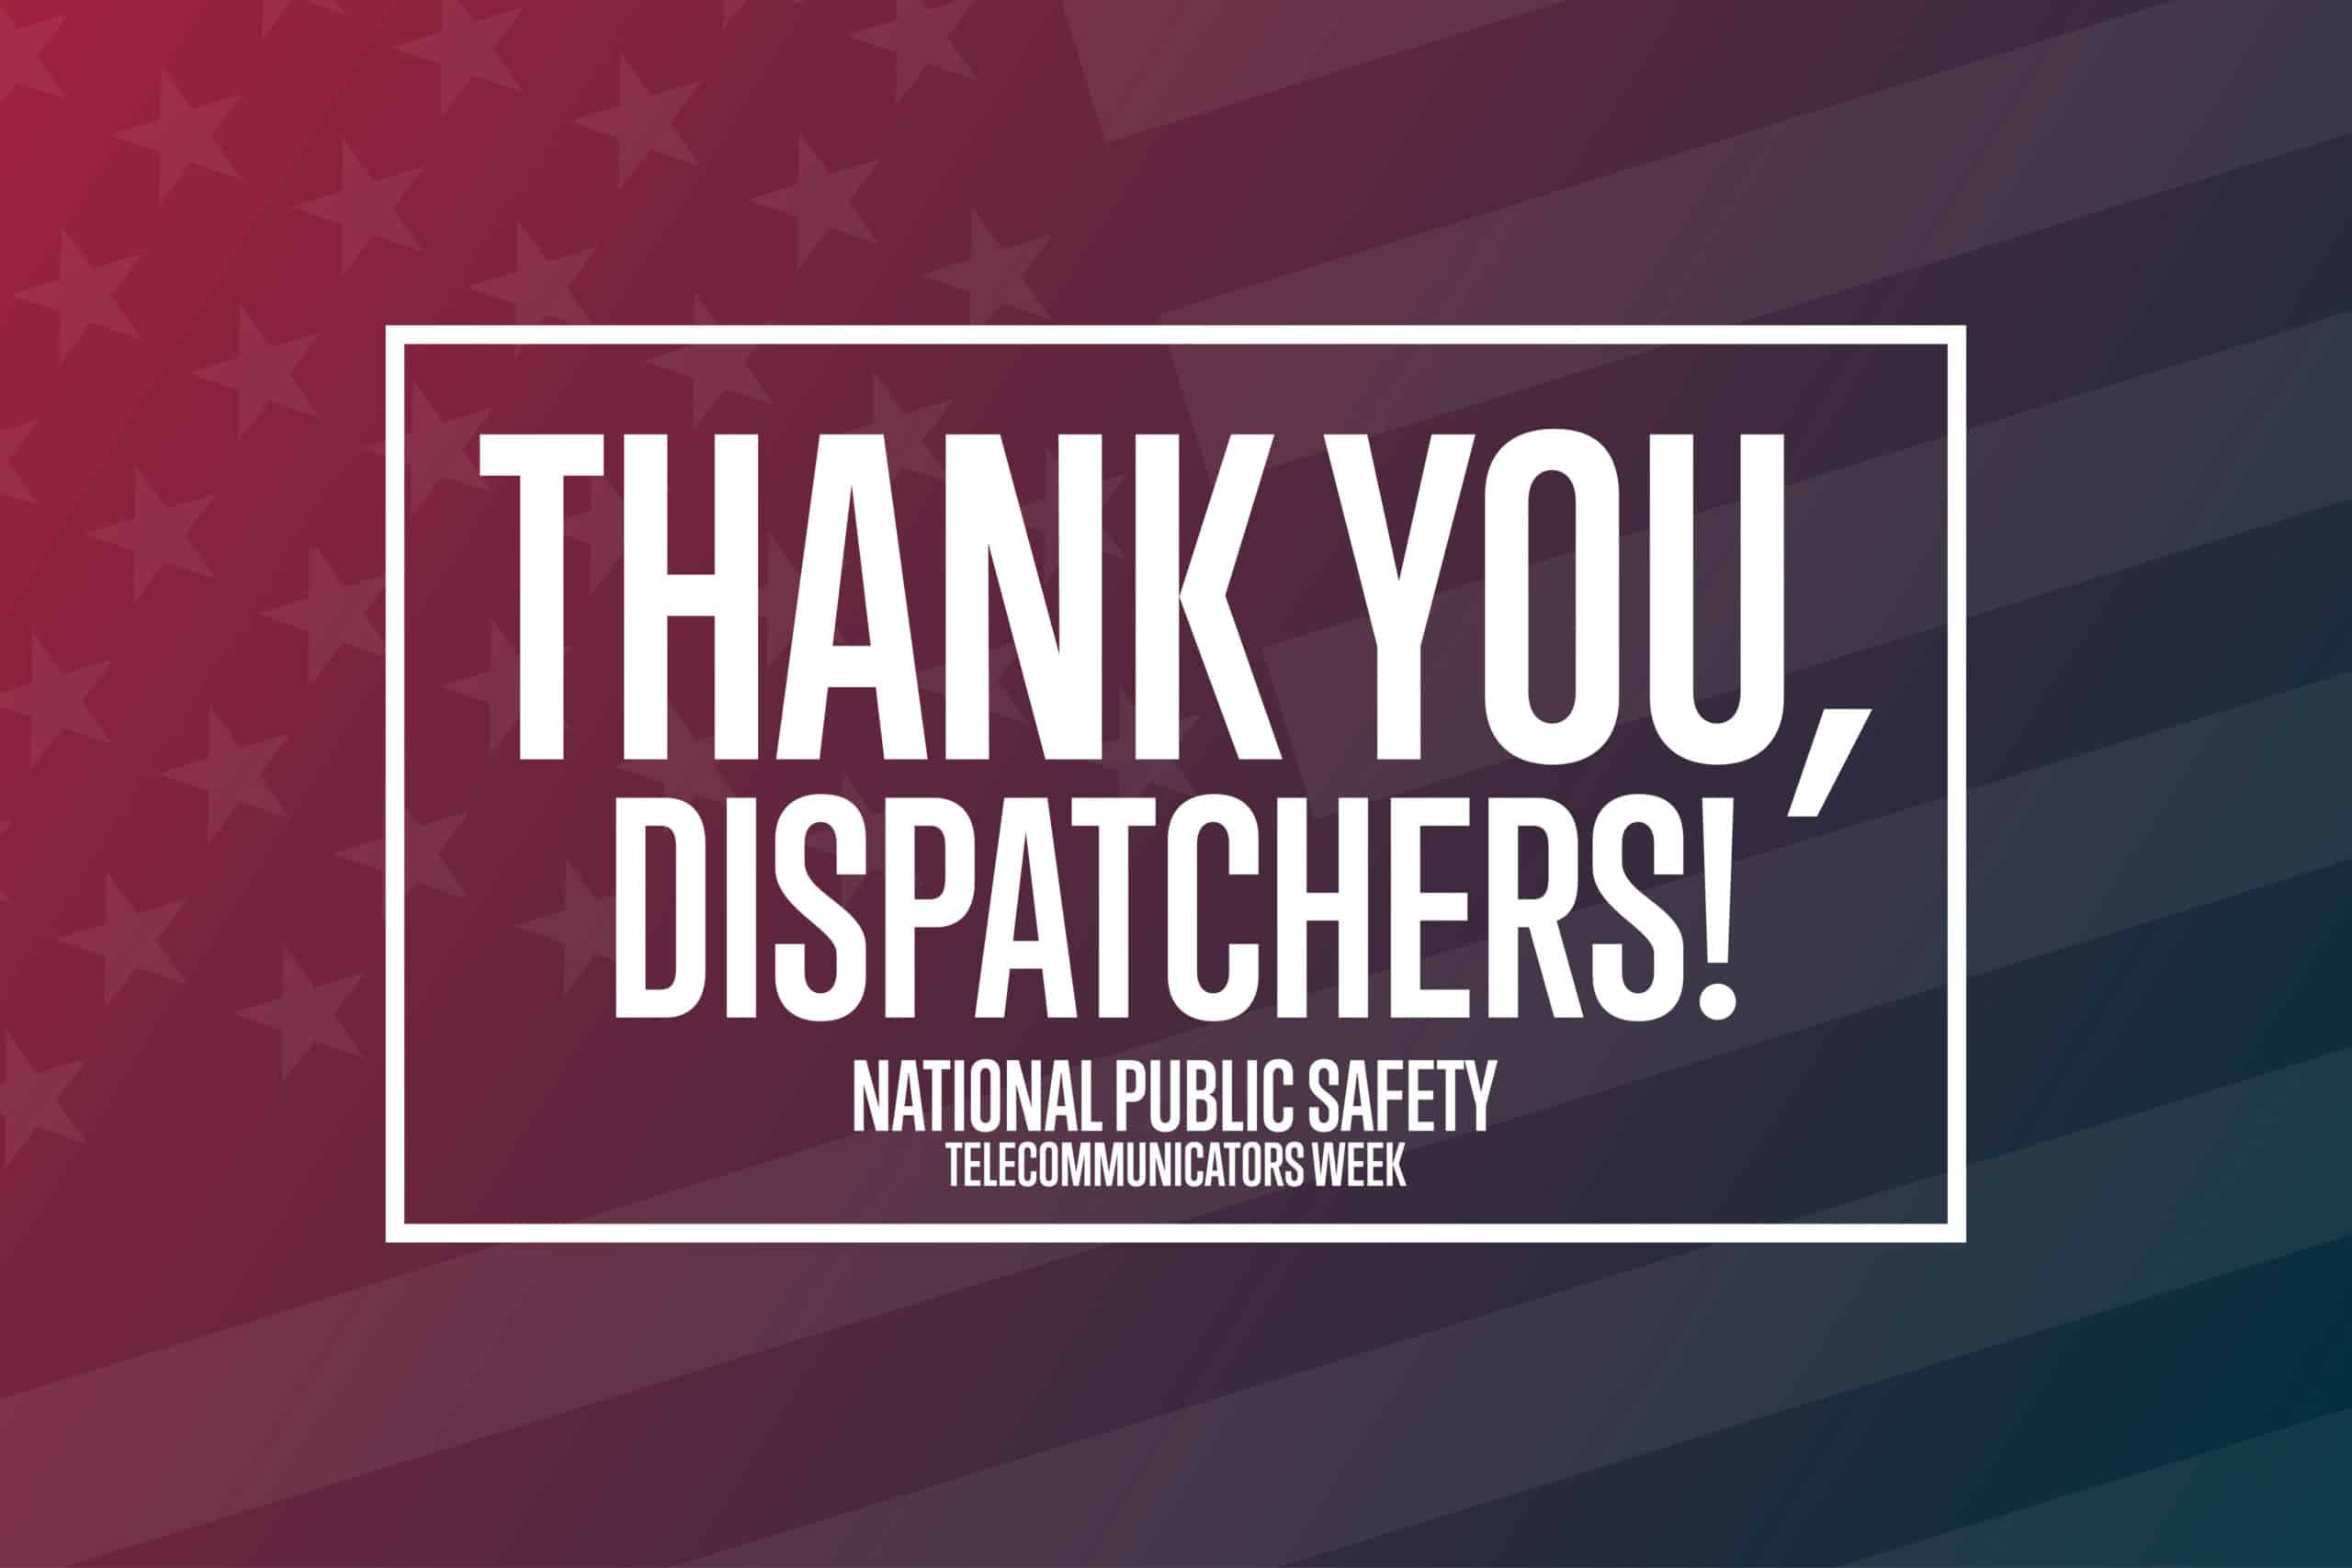 Thank you dispatchers for national telecomunicators week